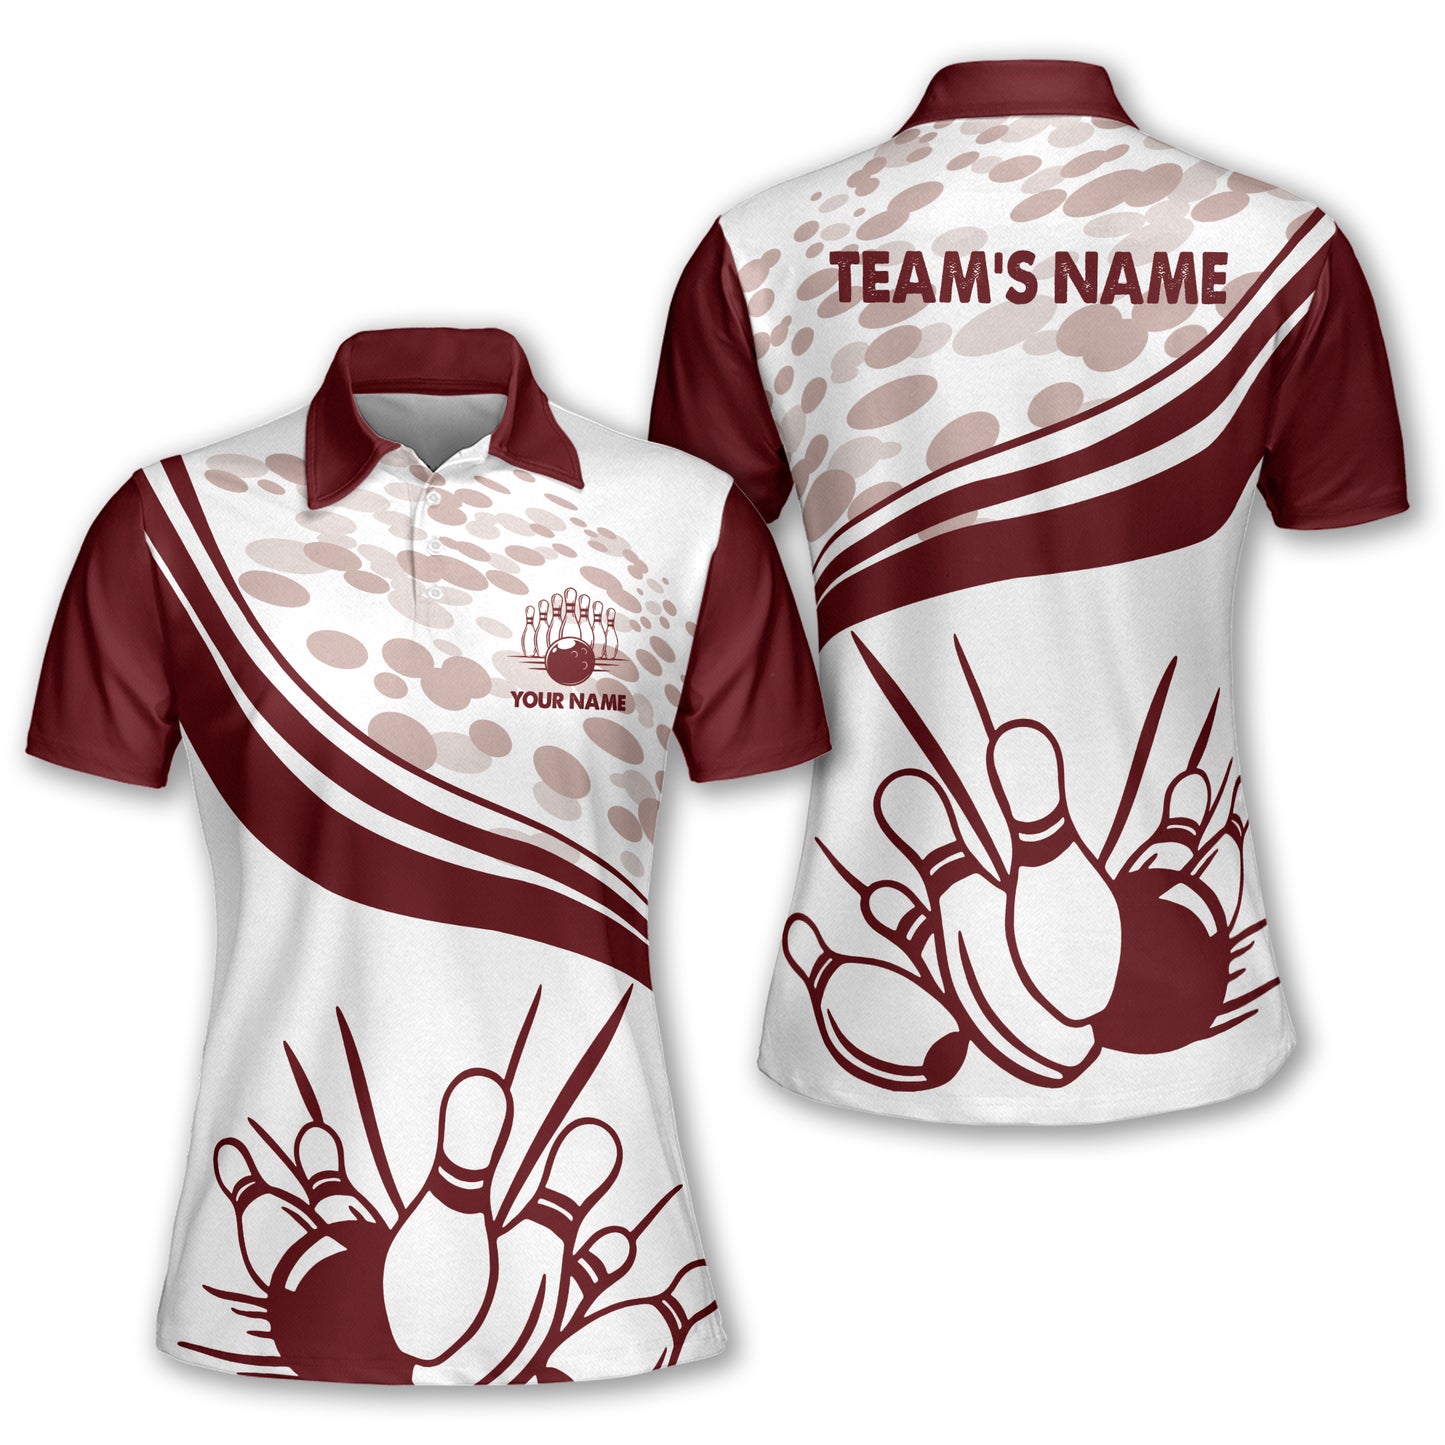 Custom Bowling Shirts For Women - Personalized Bowling Team Shirts Short Sleeve - Printed Bowling Shirts For Women - Polo Shirts For Bowling Lover BW0019